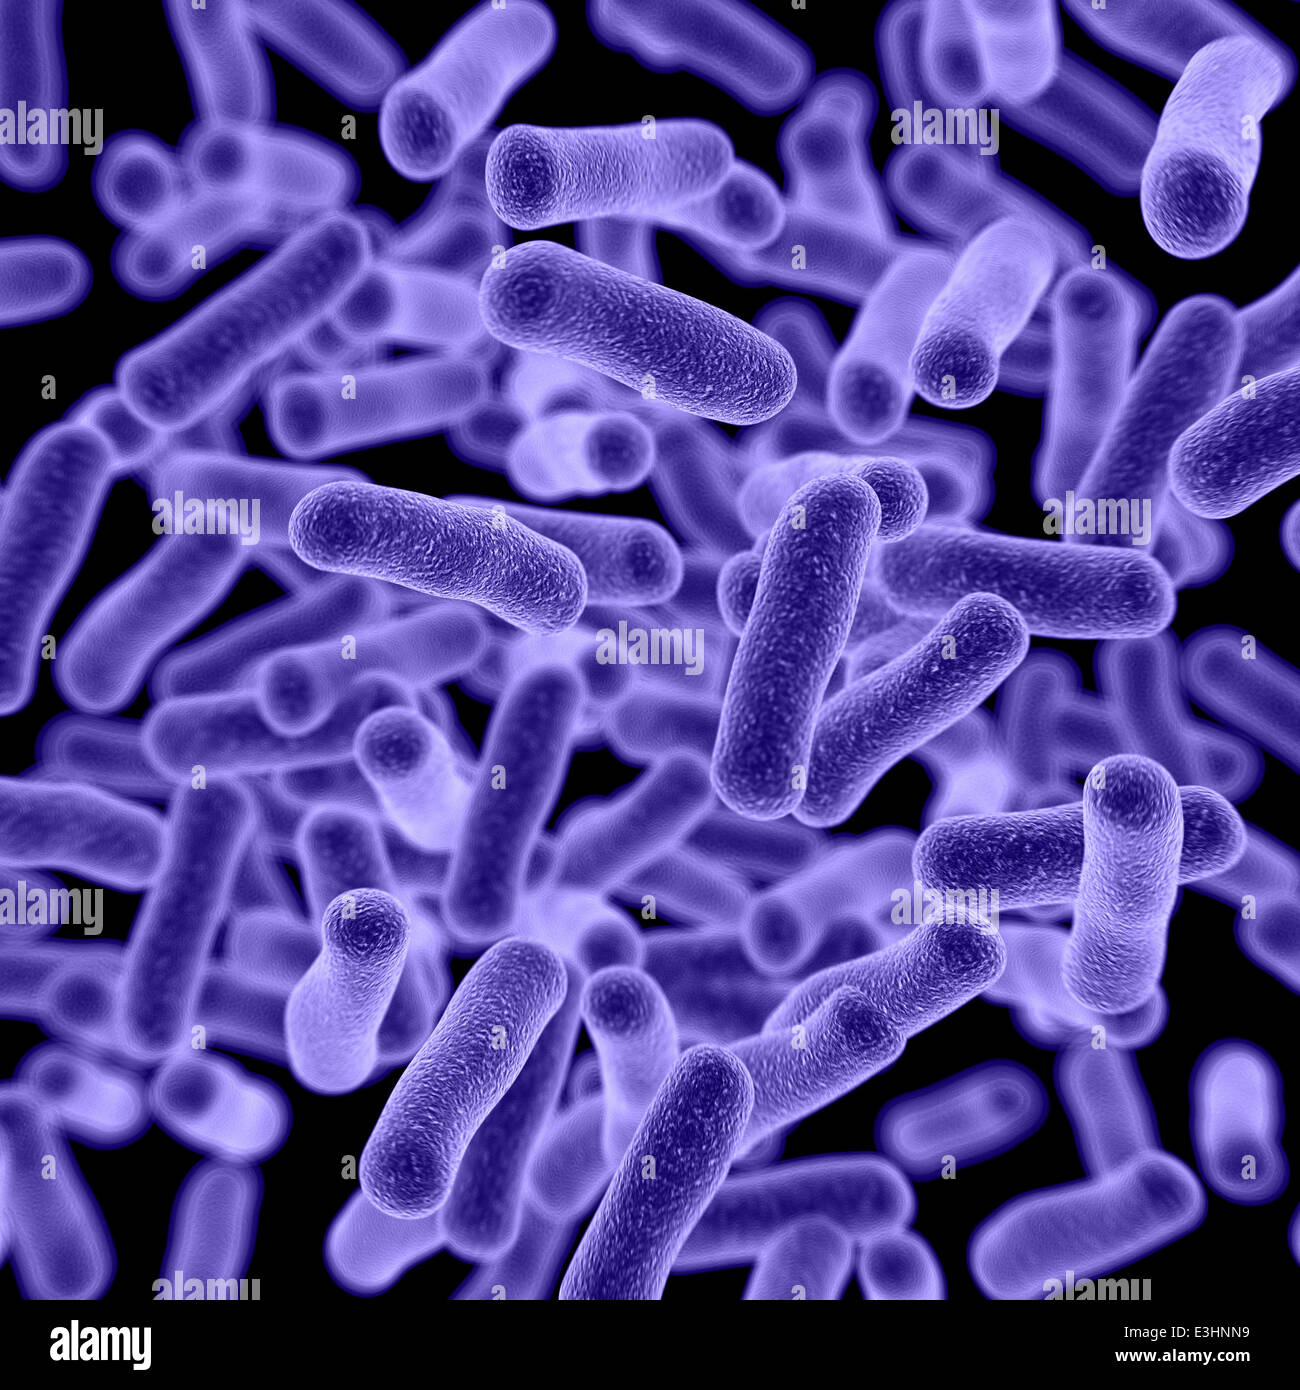 3d Microscopic view of bacteria Stock Photo - Alamy